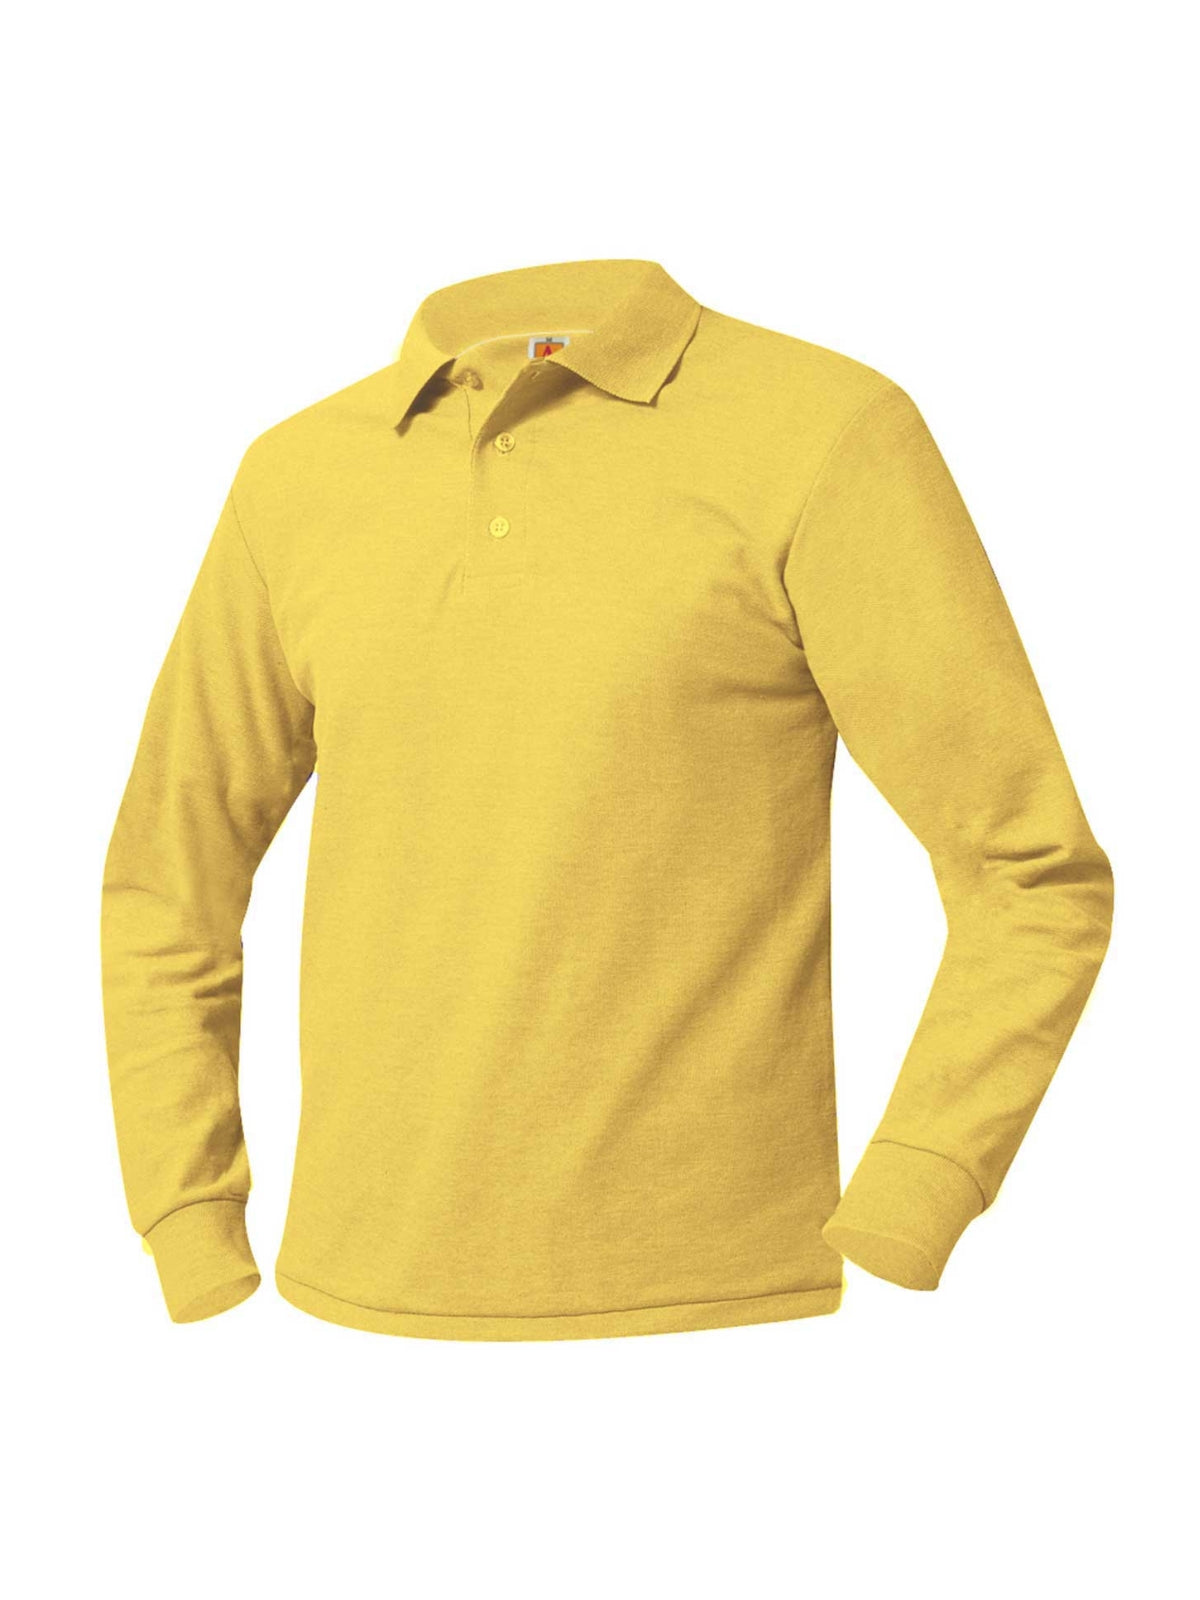 Unisex Long Sleeve Knit Shirt - 8766 - Cornsilk